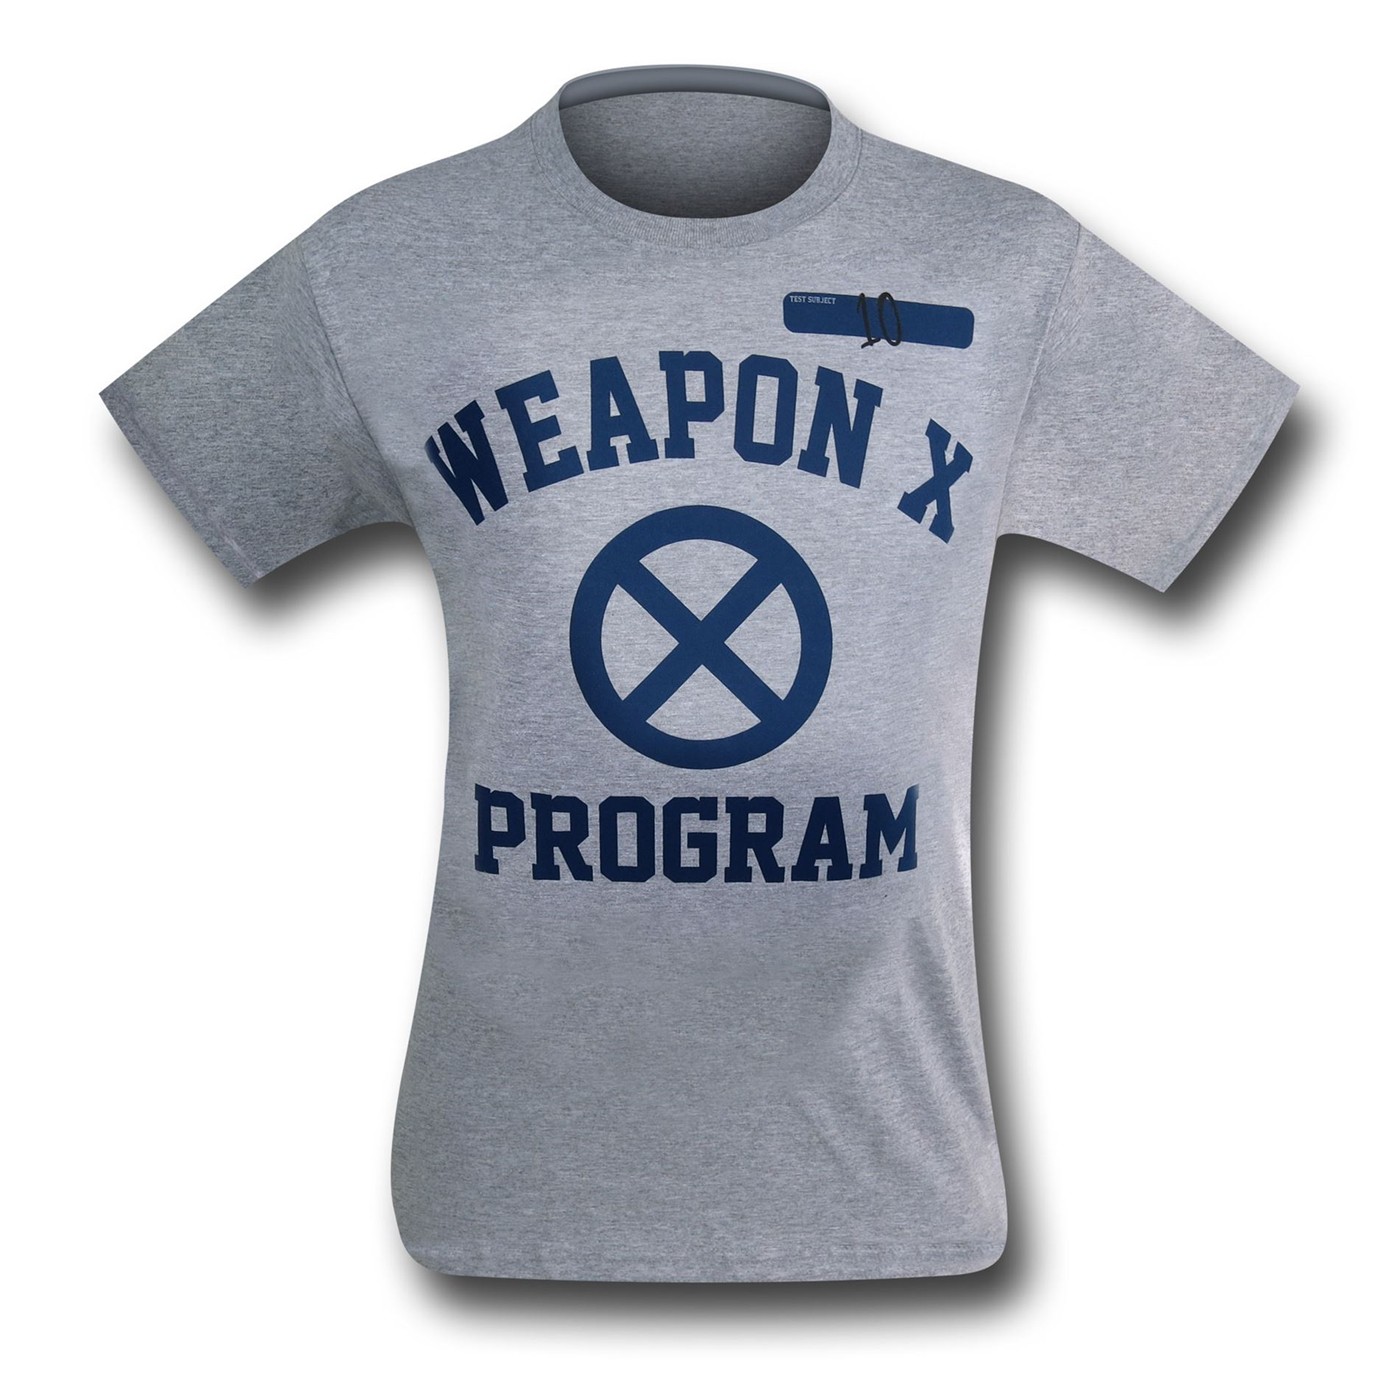 Wolverine Weapon X Program T-Shirt